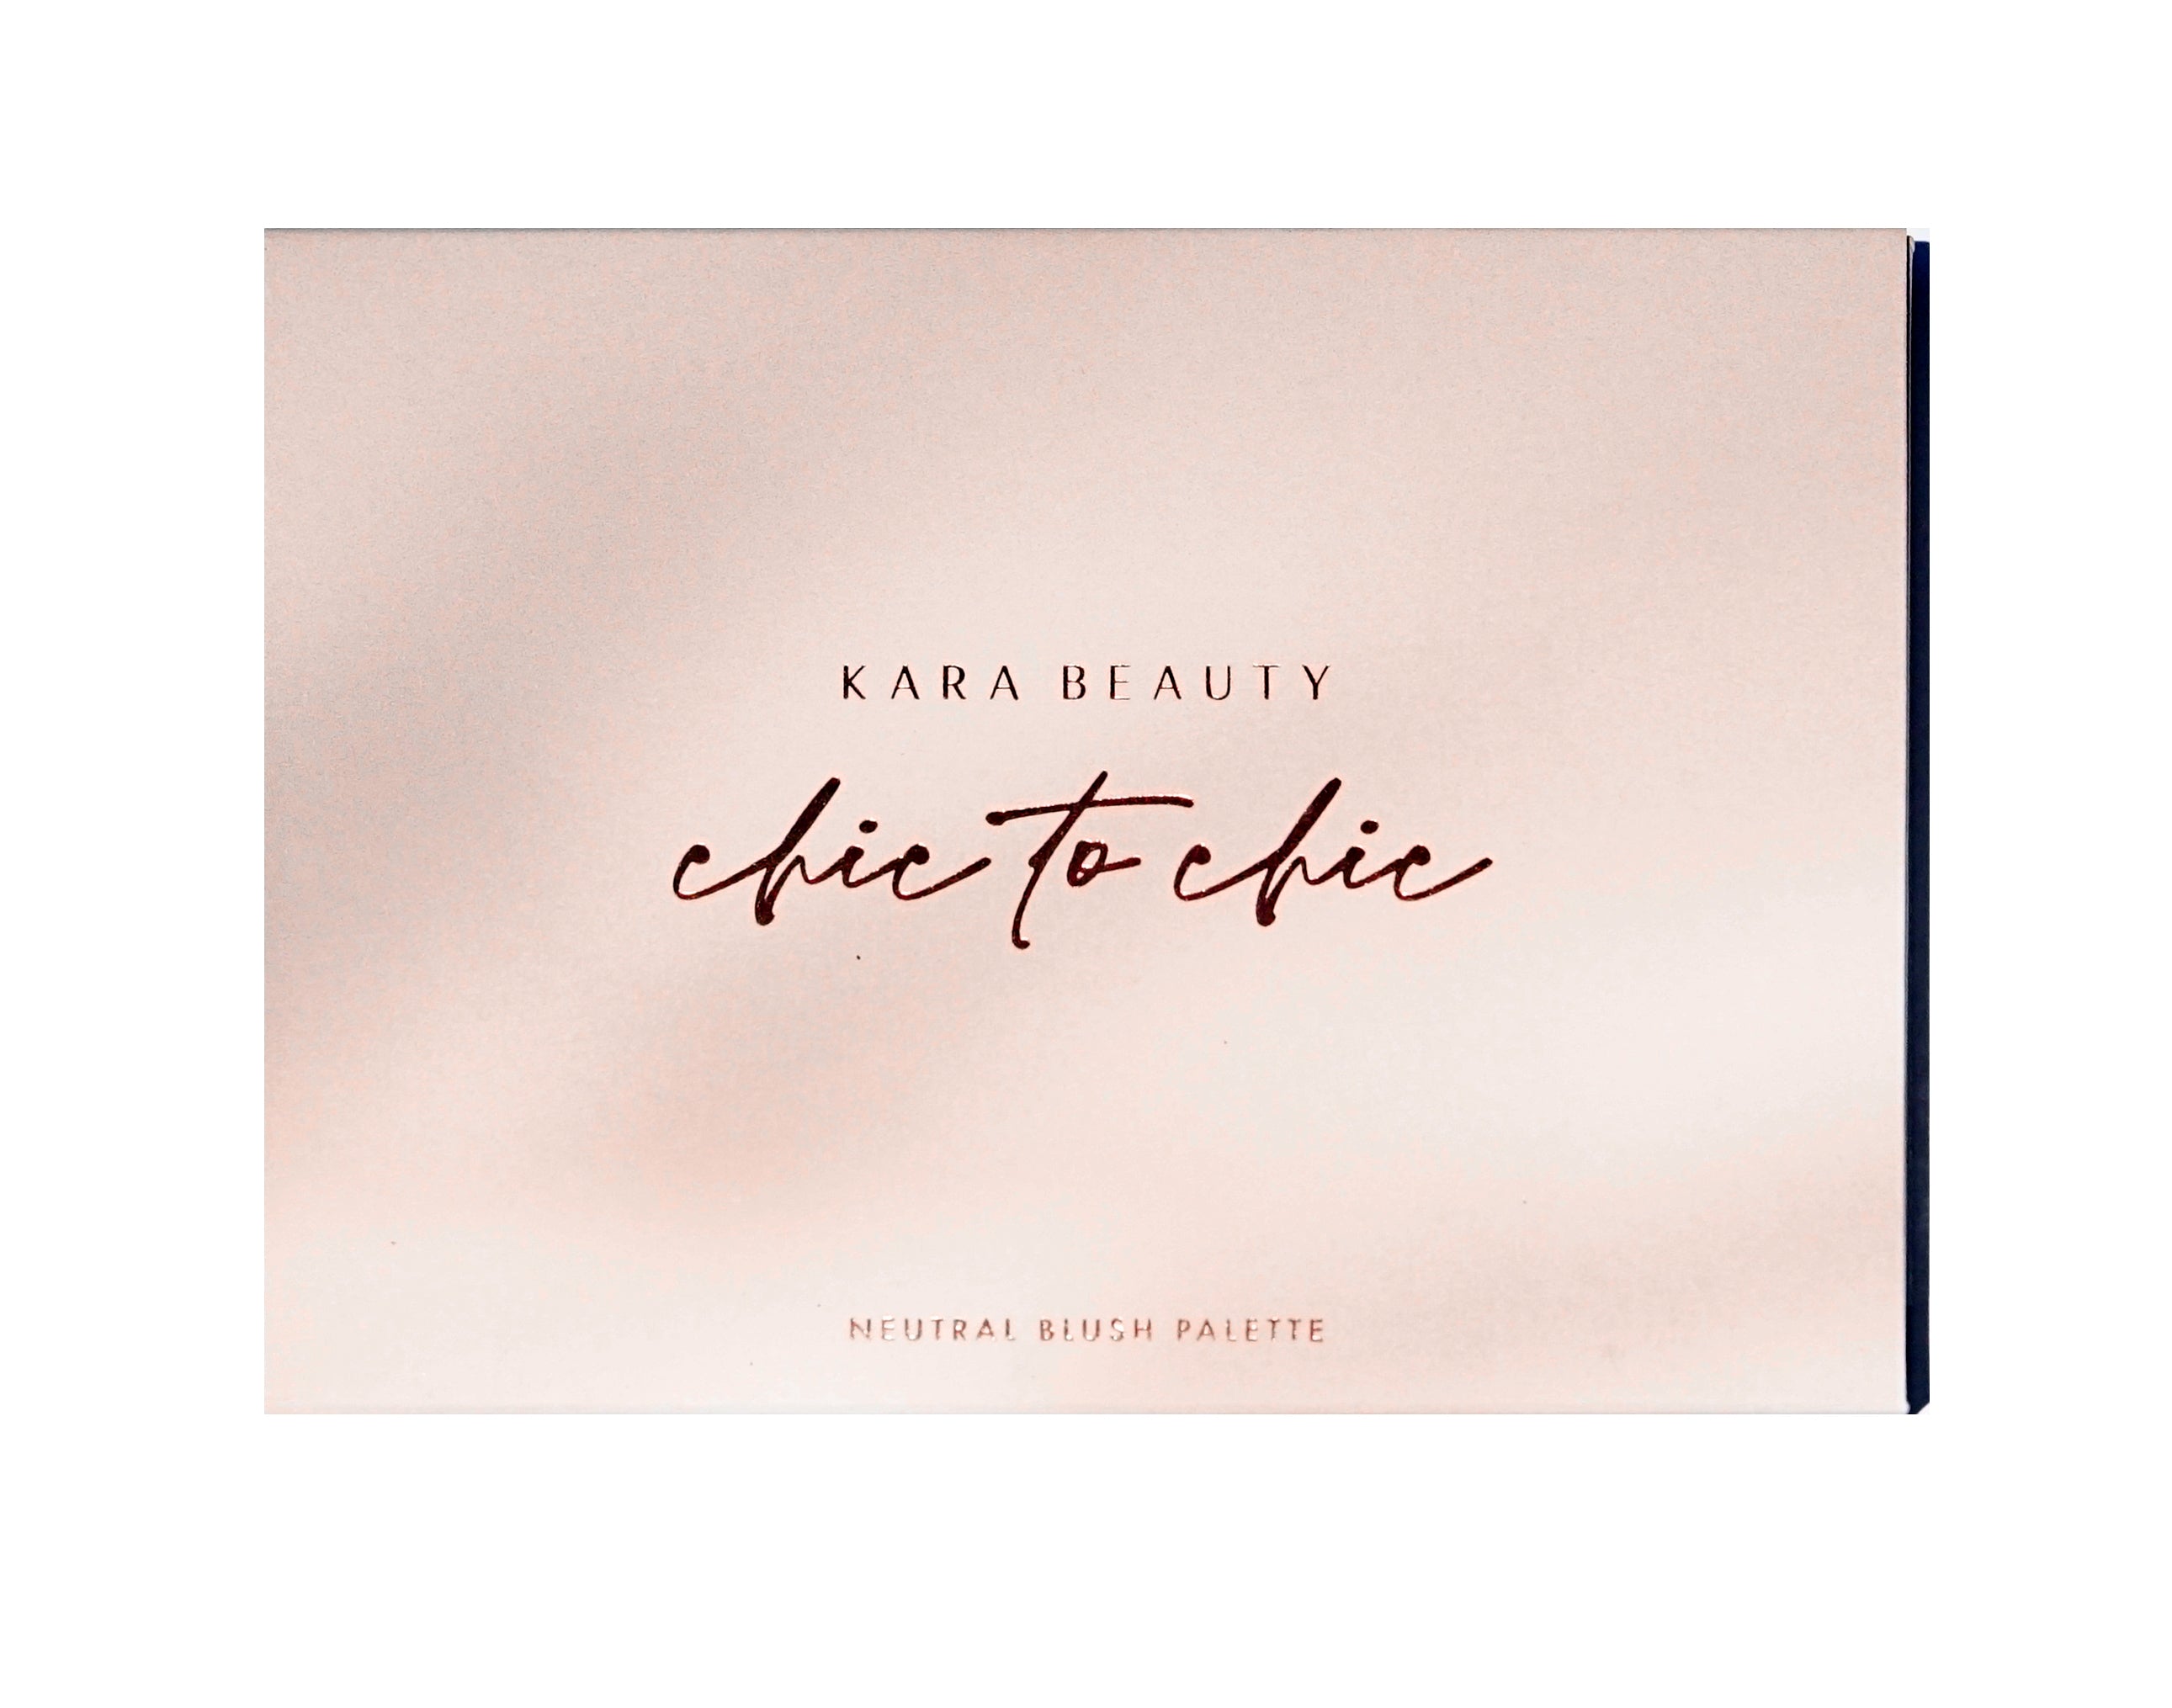 Kara Beauty's Chic to Chic 6-Shade Neutral Blush Palette